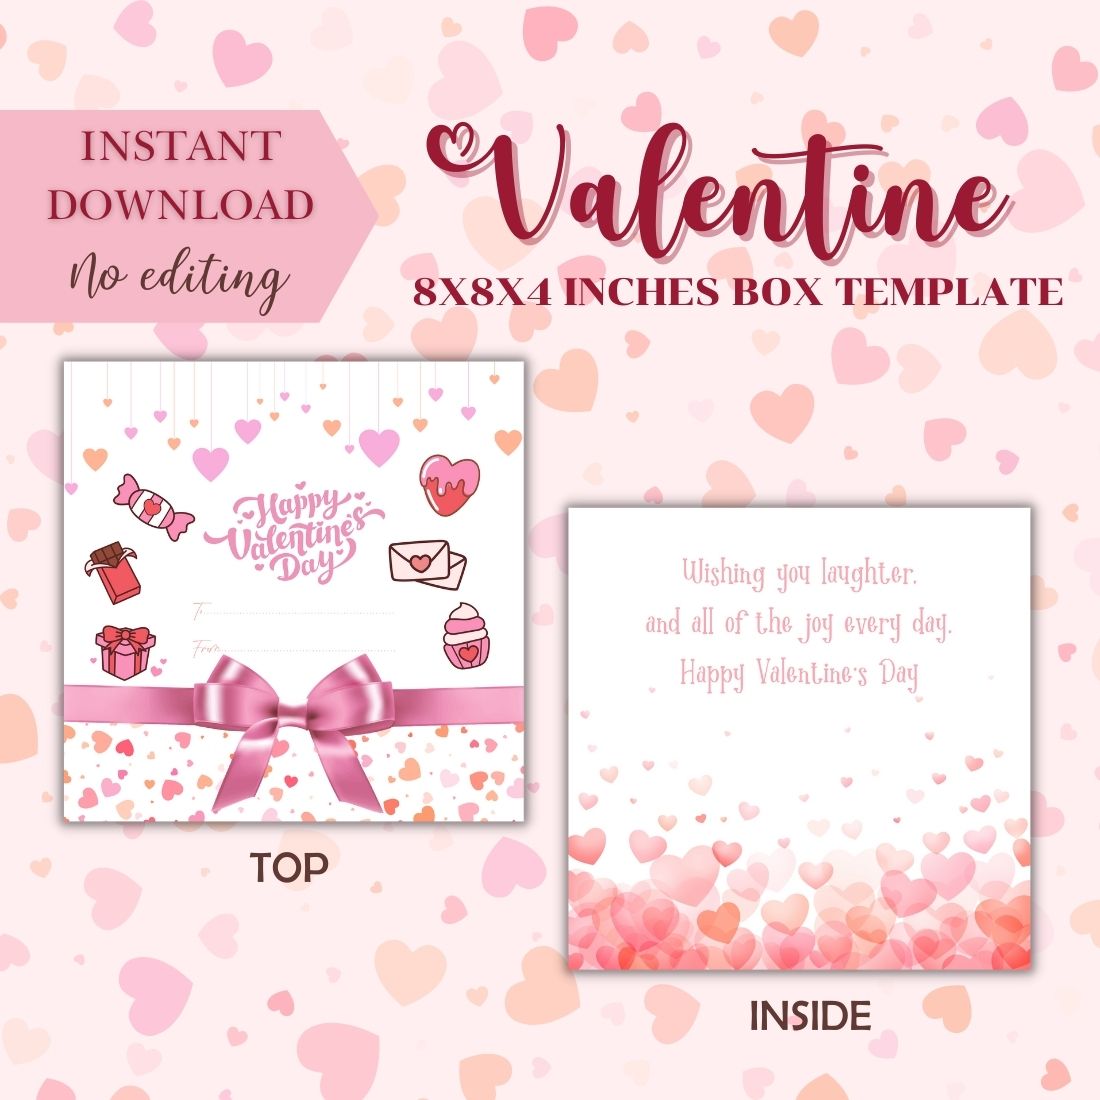 Treat Box Valentine Template cover image.